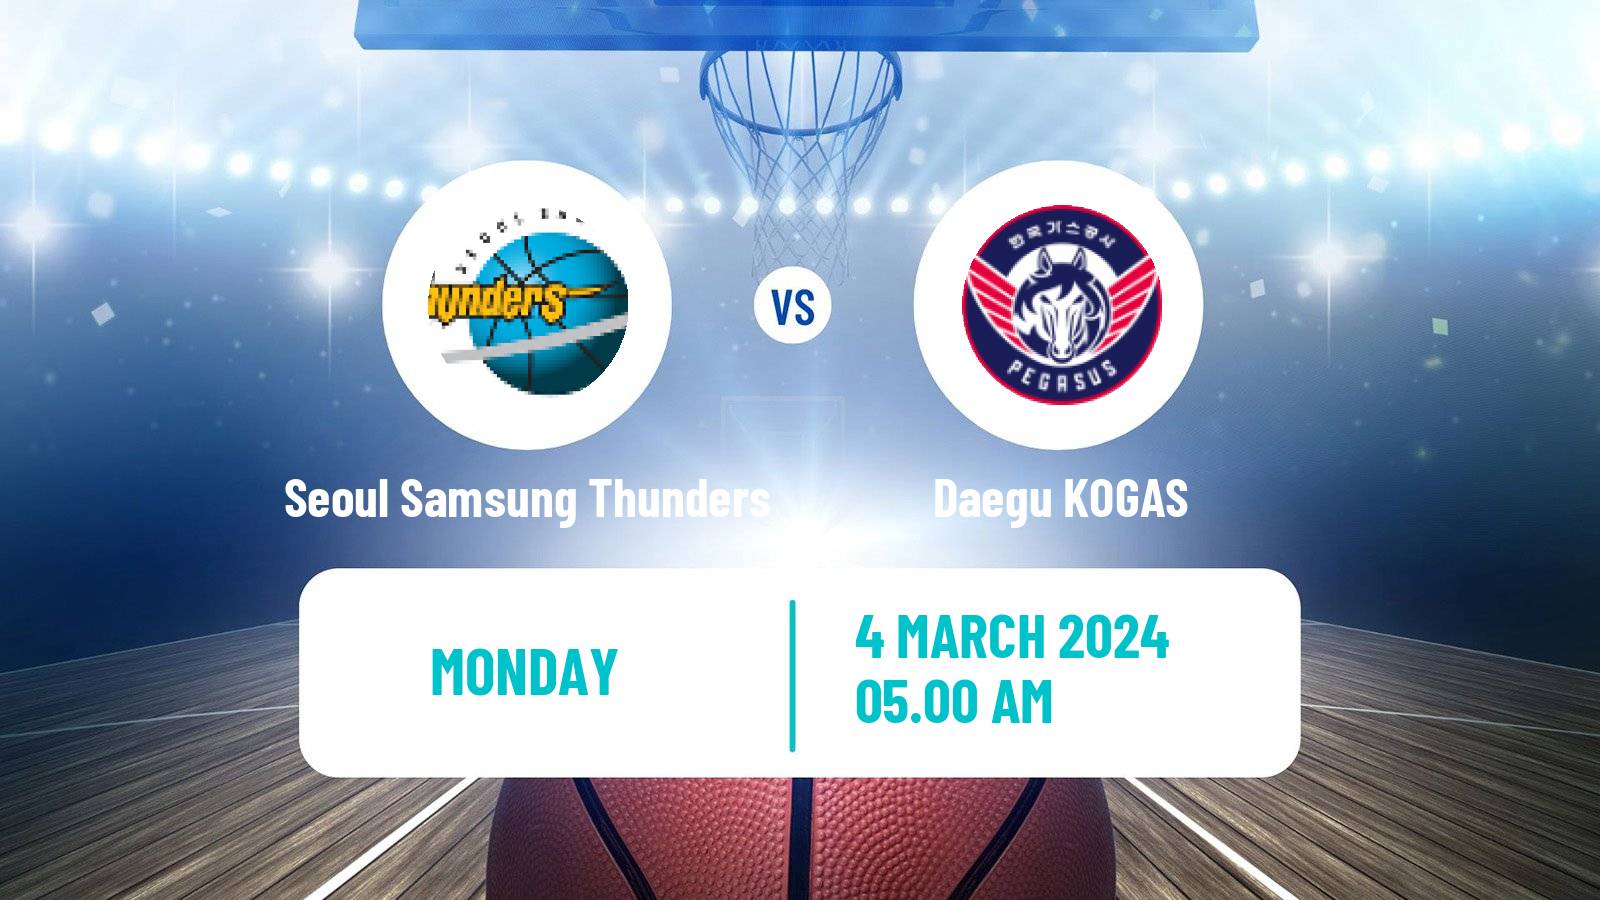 Basketball KBL Seoul Samsung Thunders - Daegu KOGAS